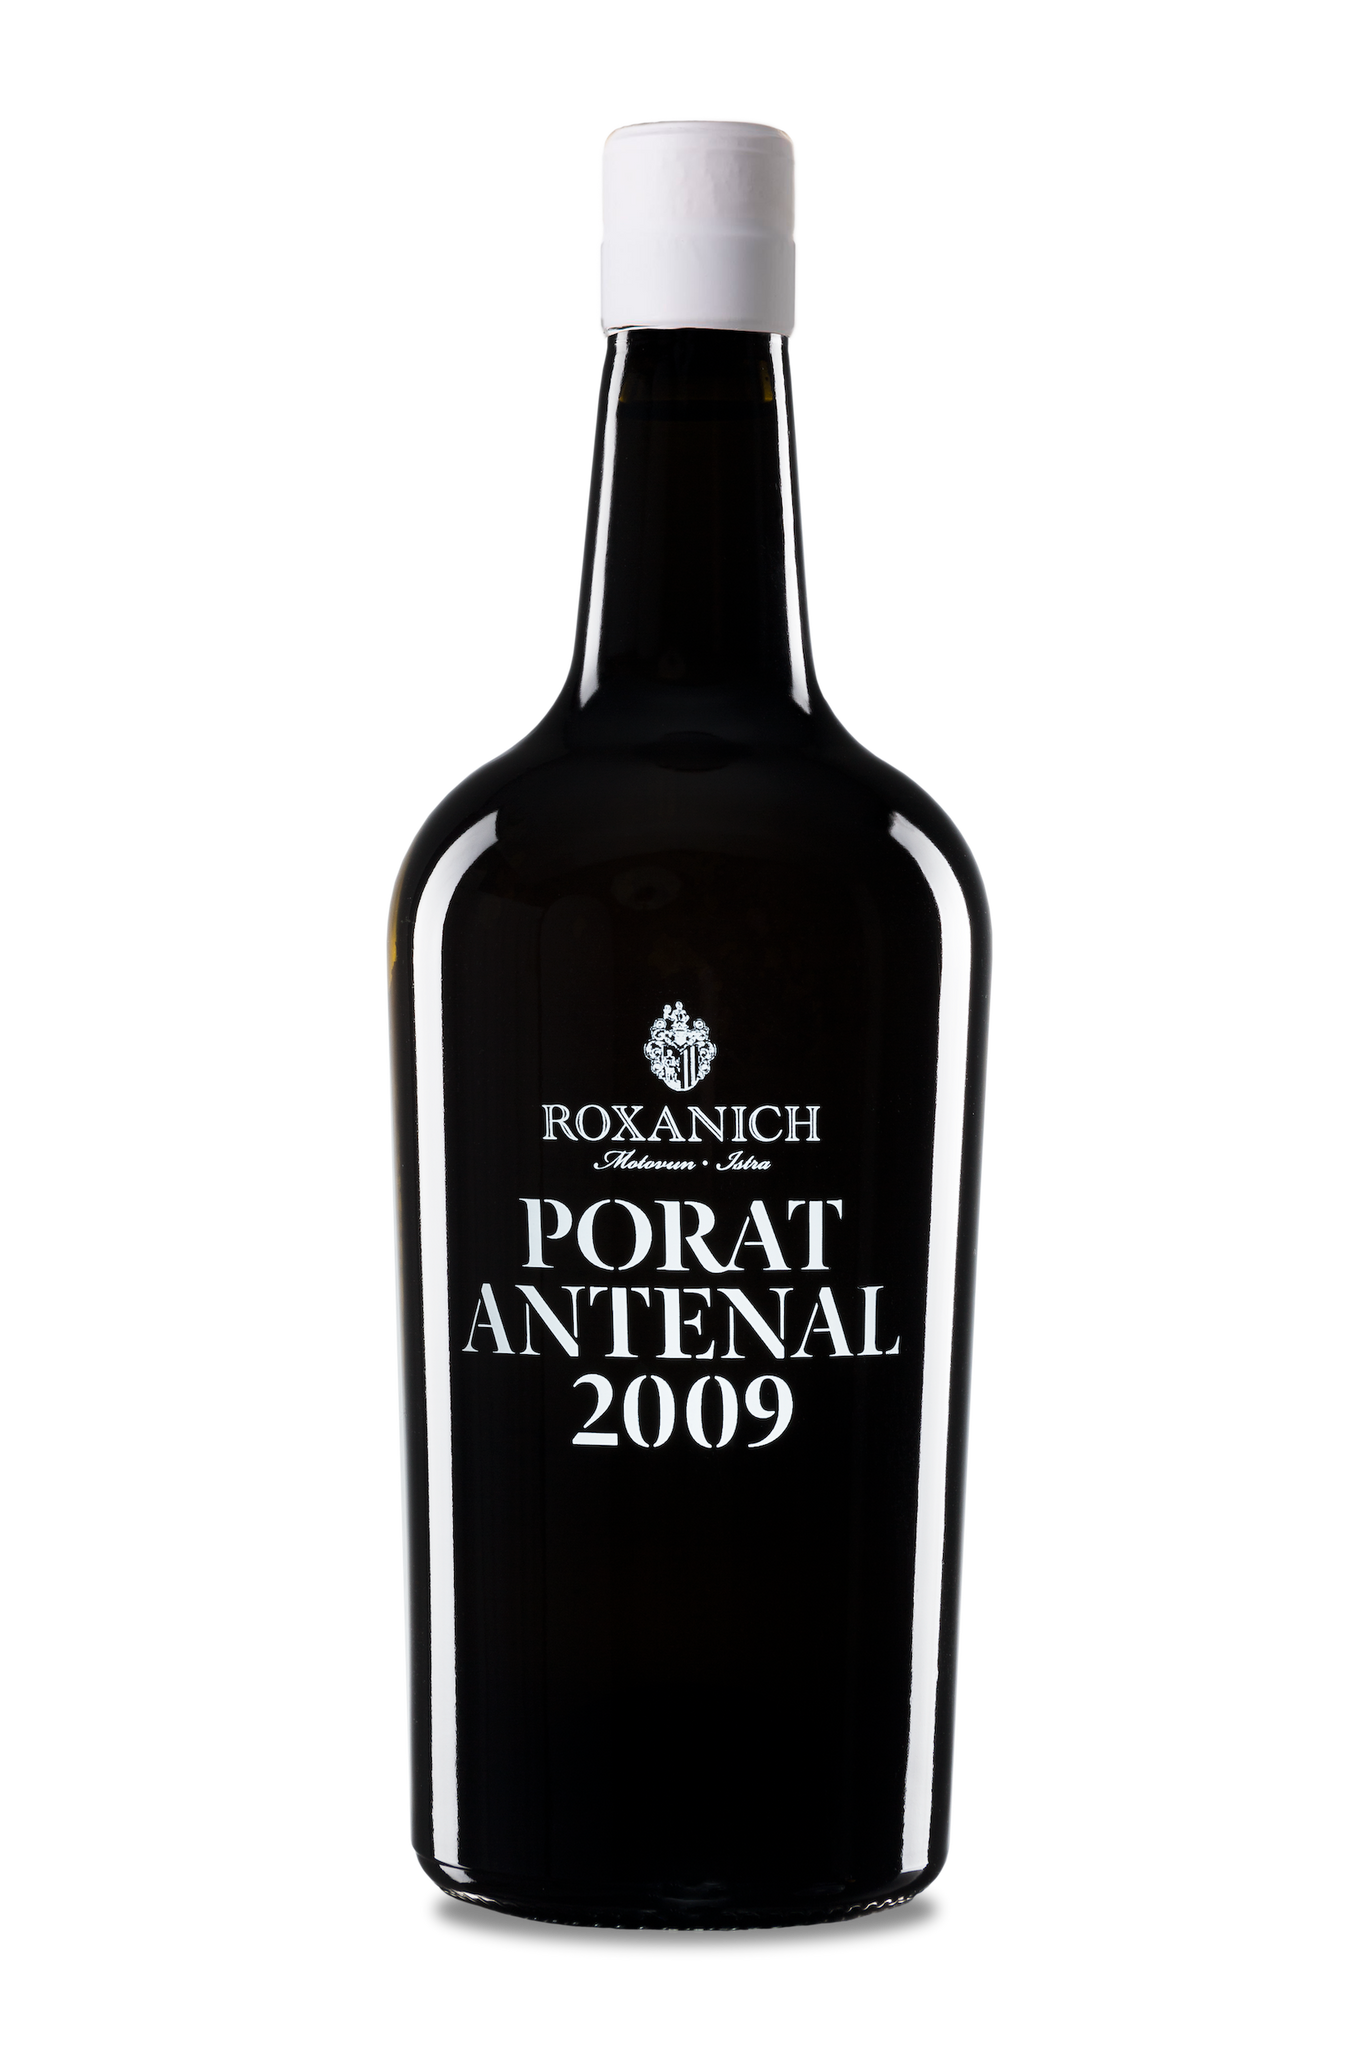 Roxanich Porat Antenal Fortified Wine